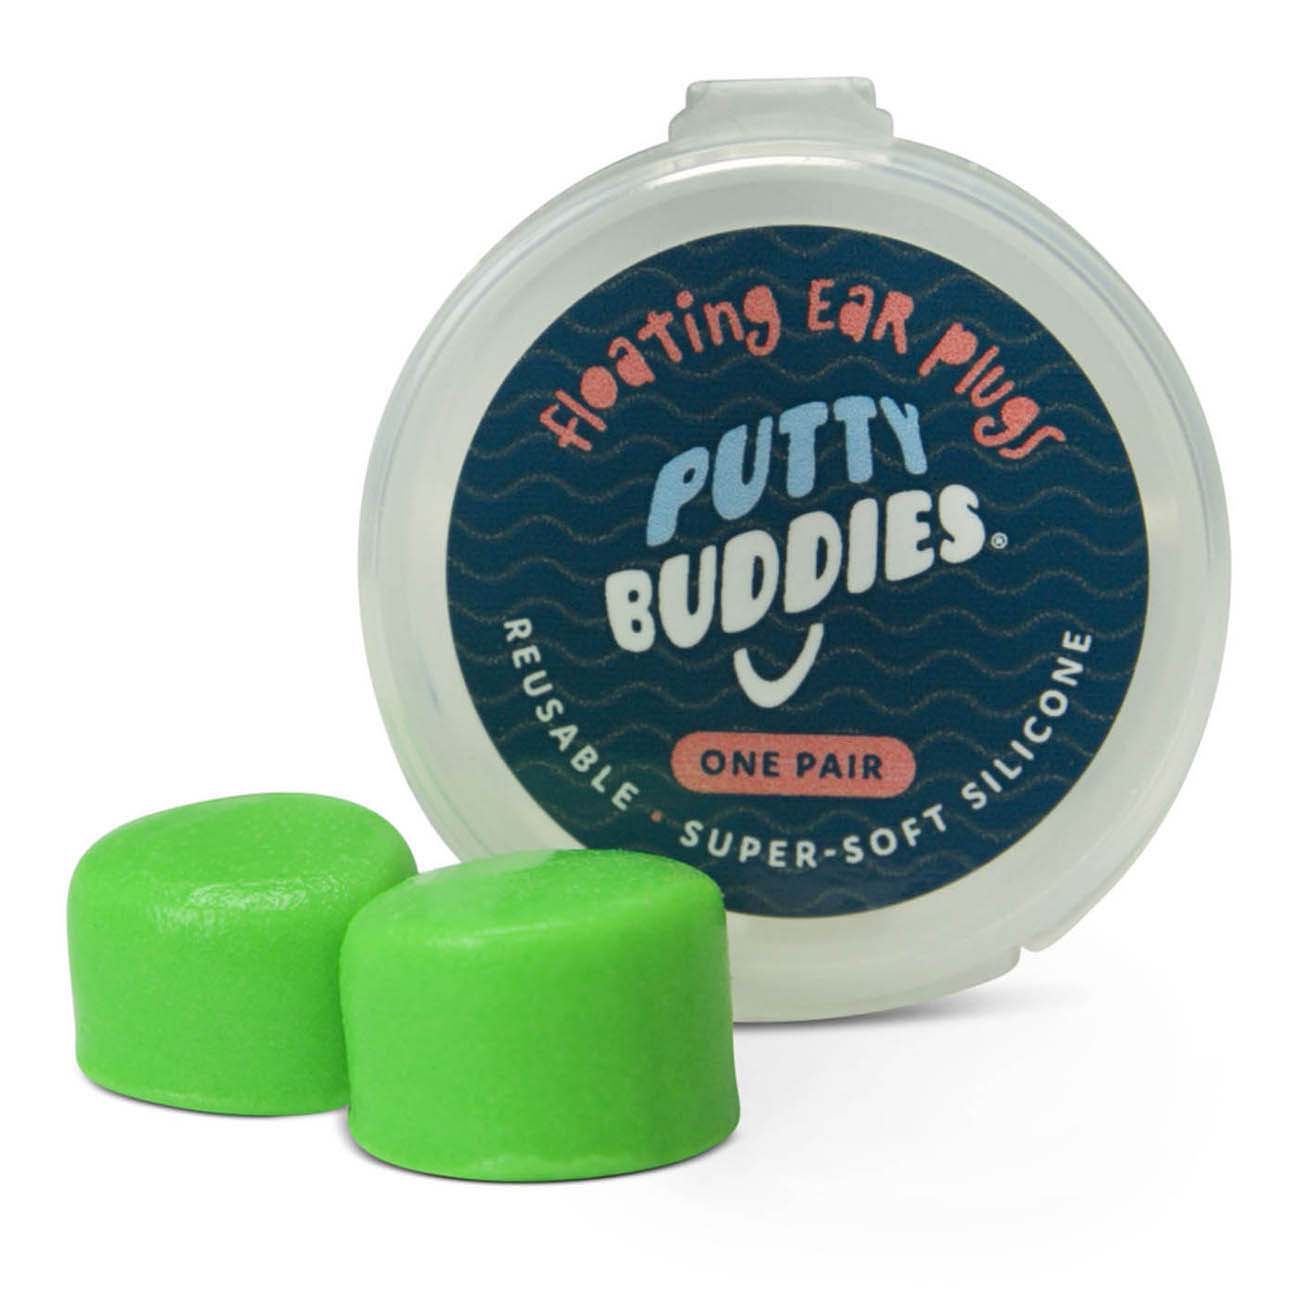 Putty Buddies Floating Ear Plugs Green